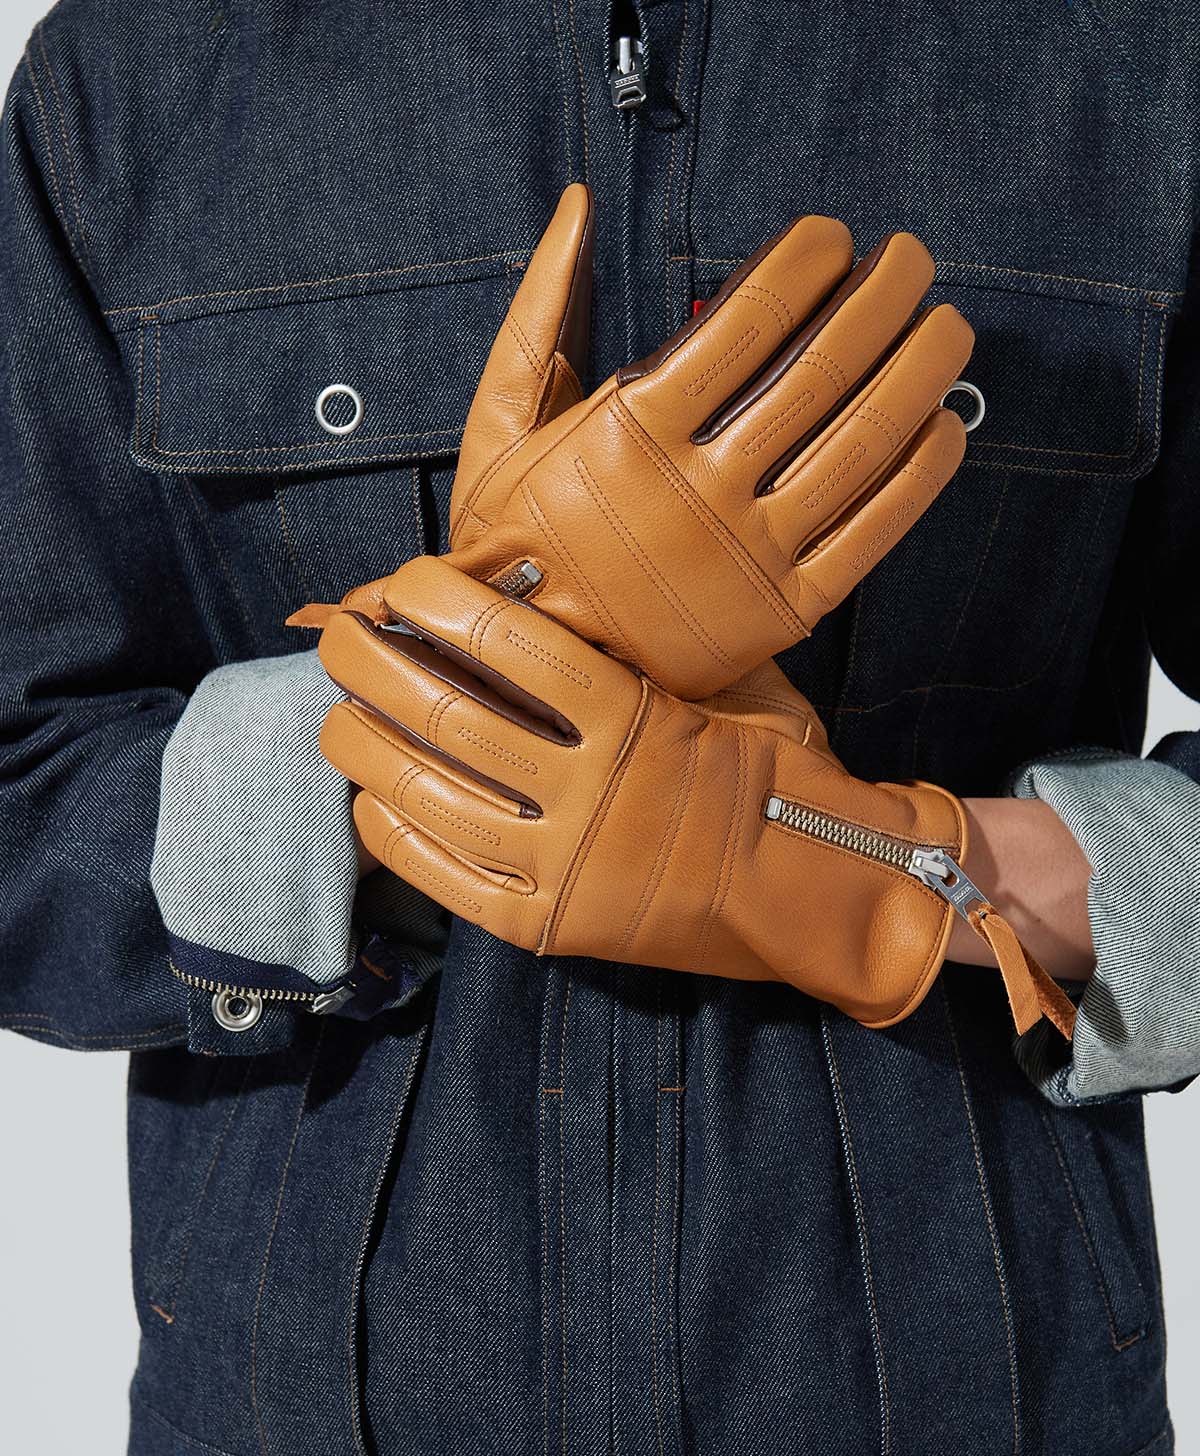 ROX Glove / Brown